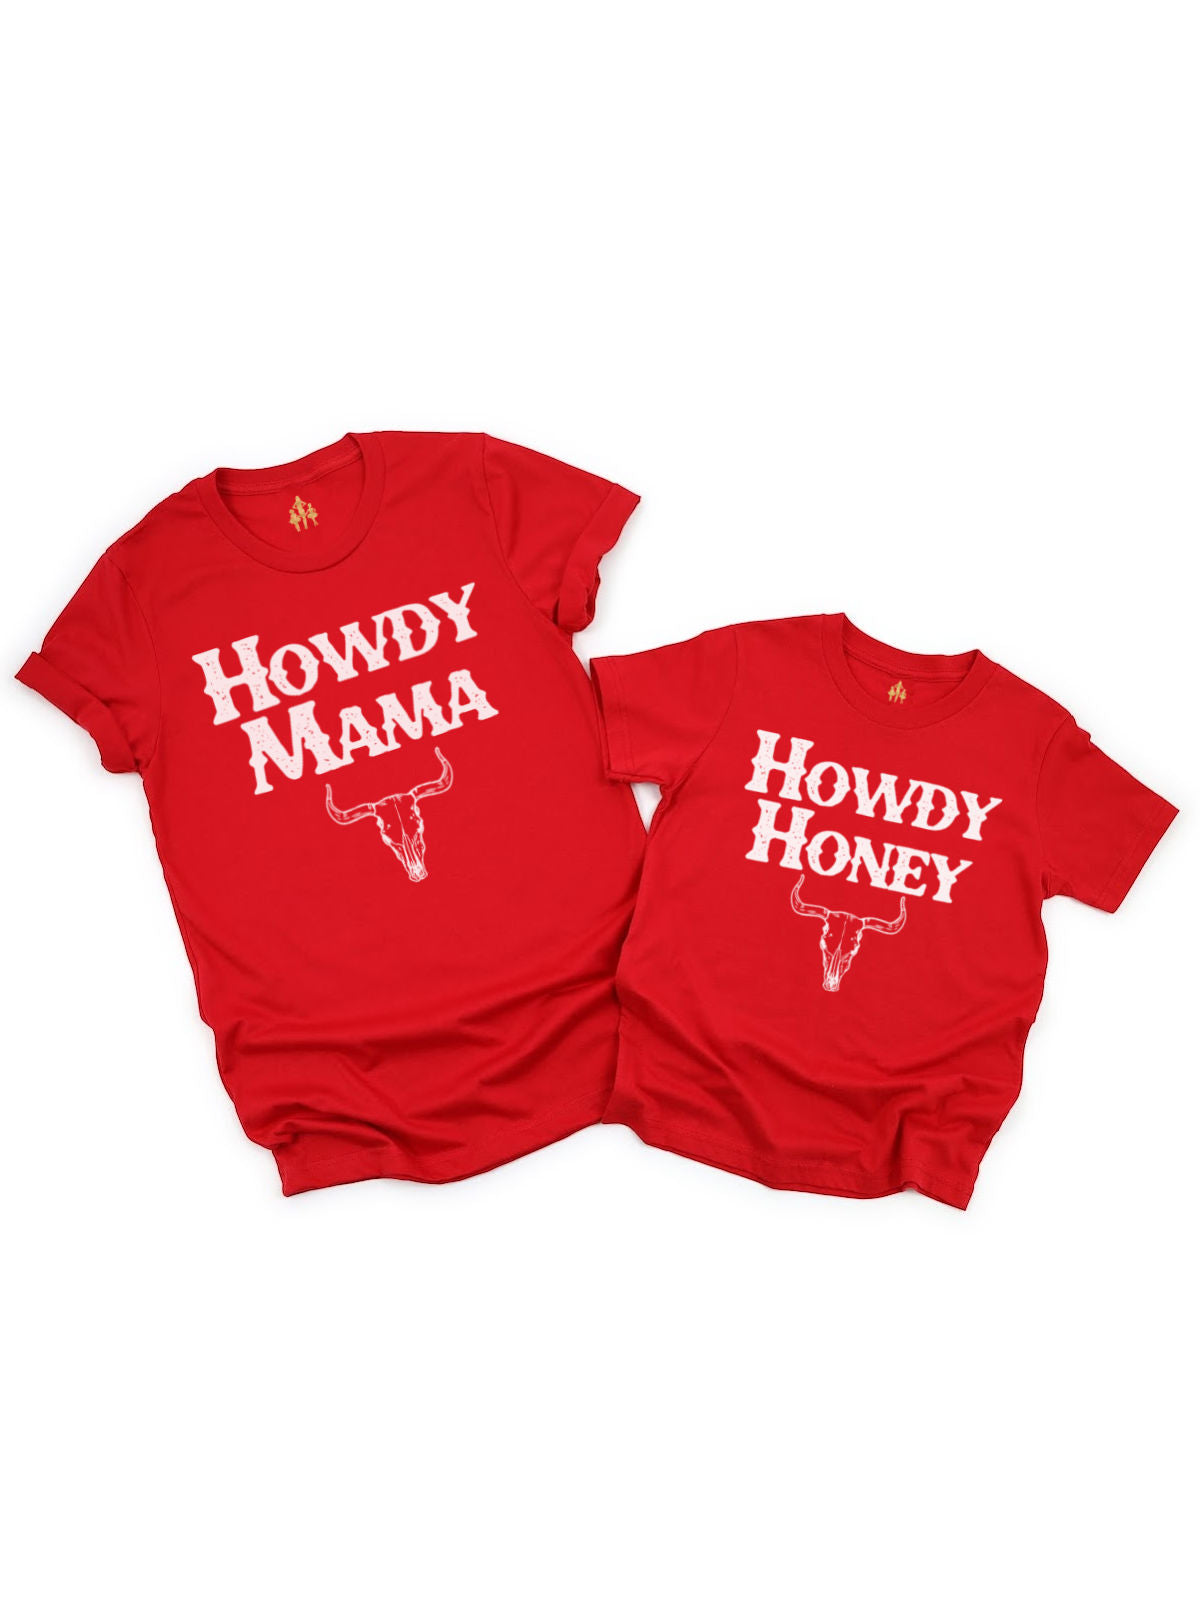 Howdy Mama Howdy Honey Matching Country Shirts